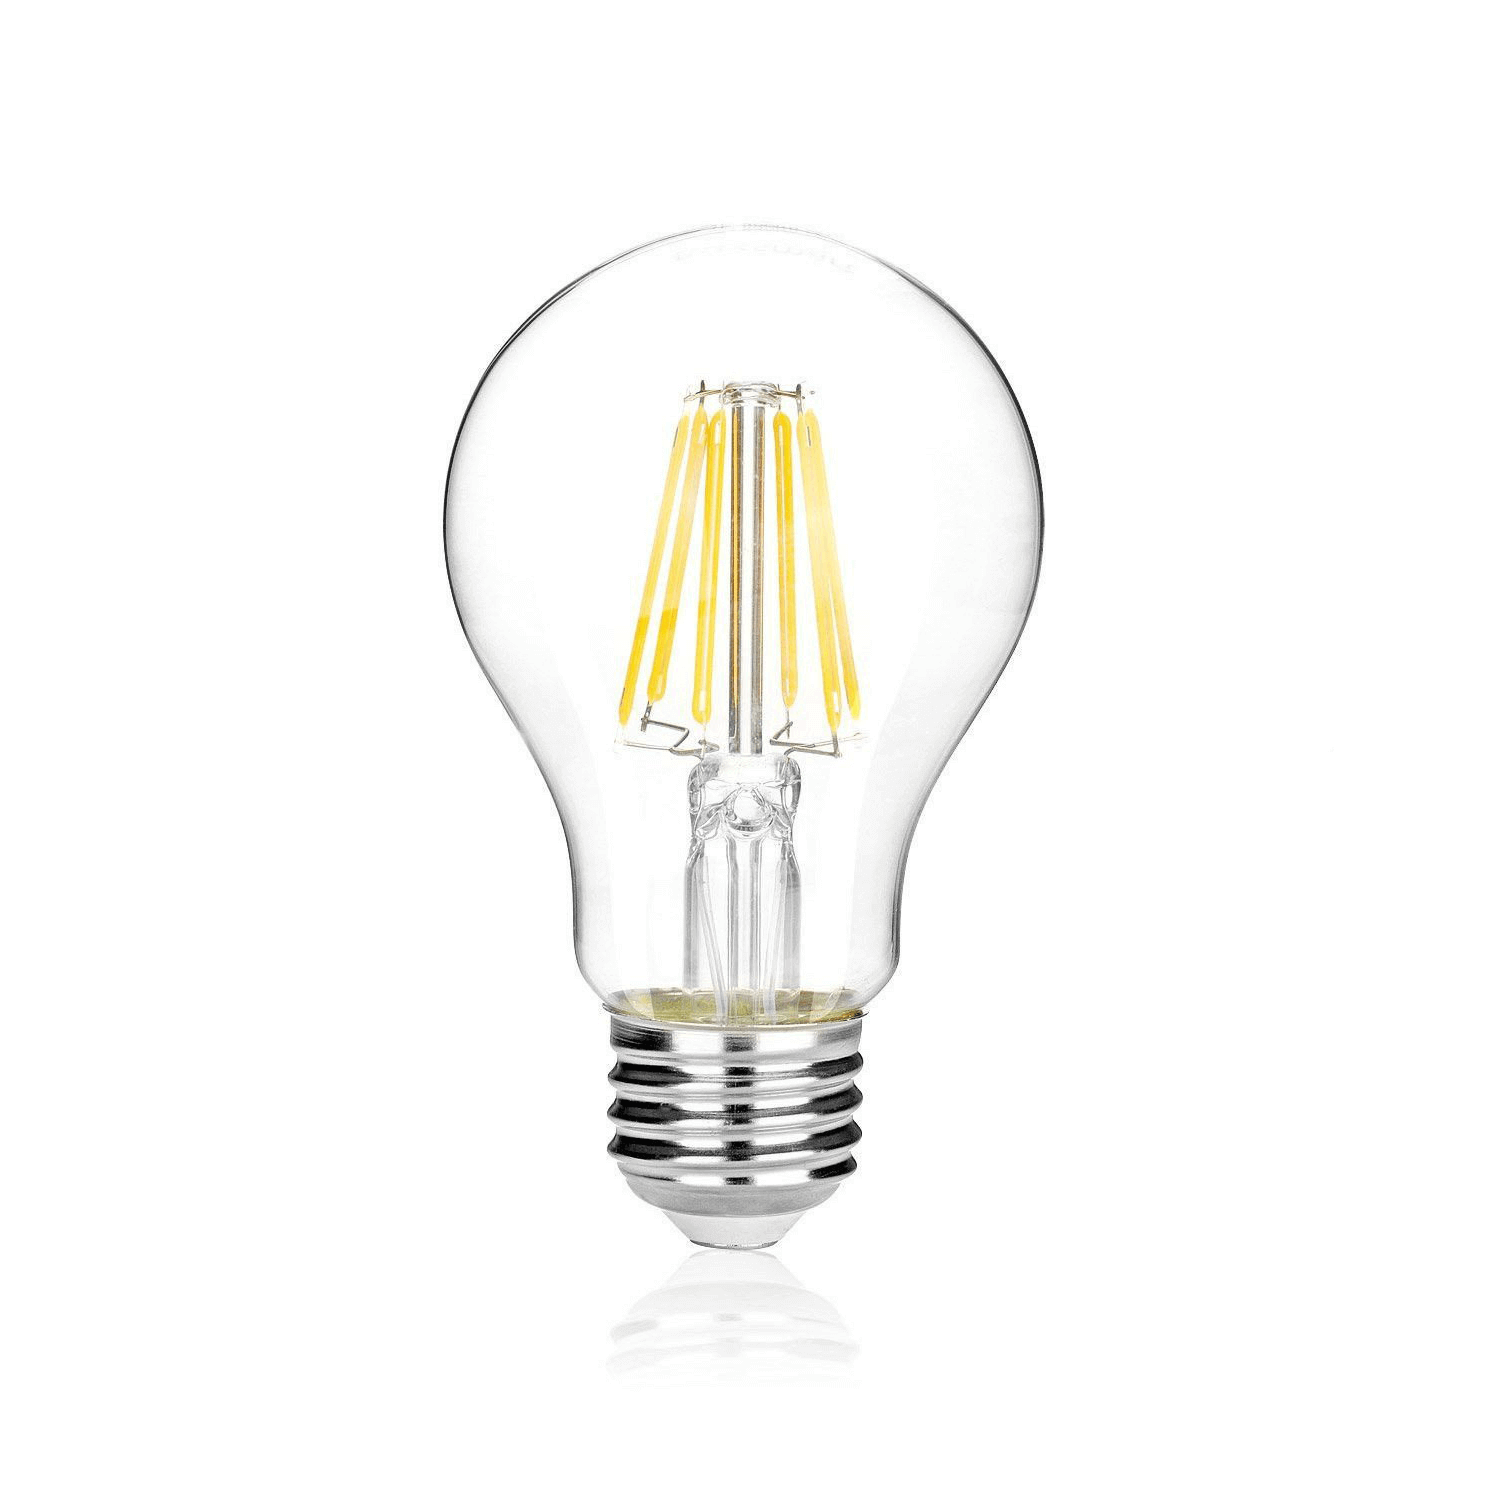 dood Verbeteren Hoeveelheid van LED light bulb - Steel Lighting Co